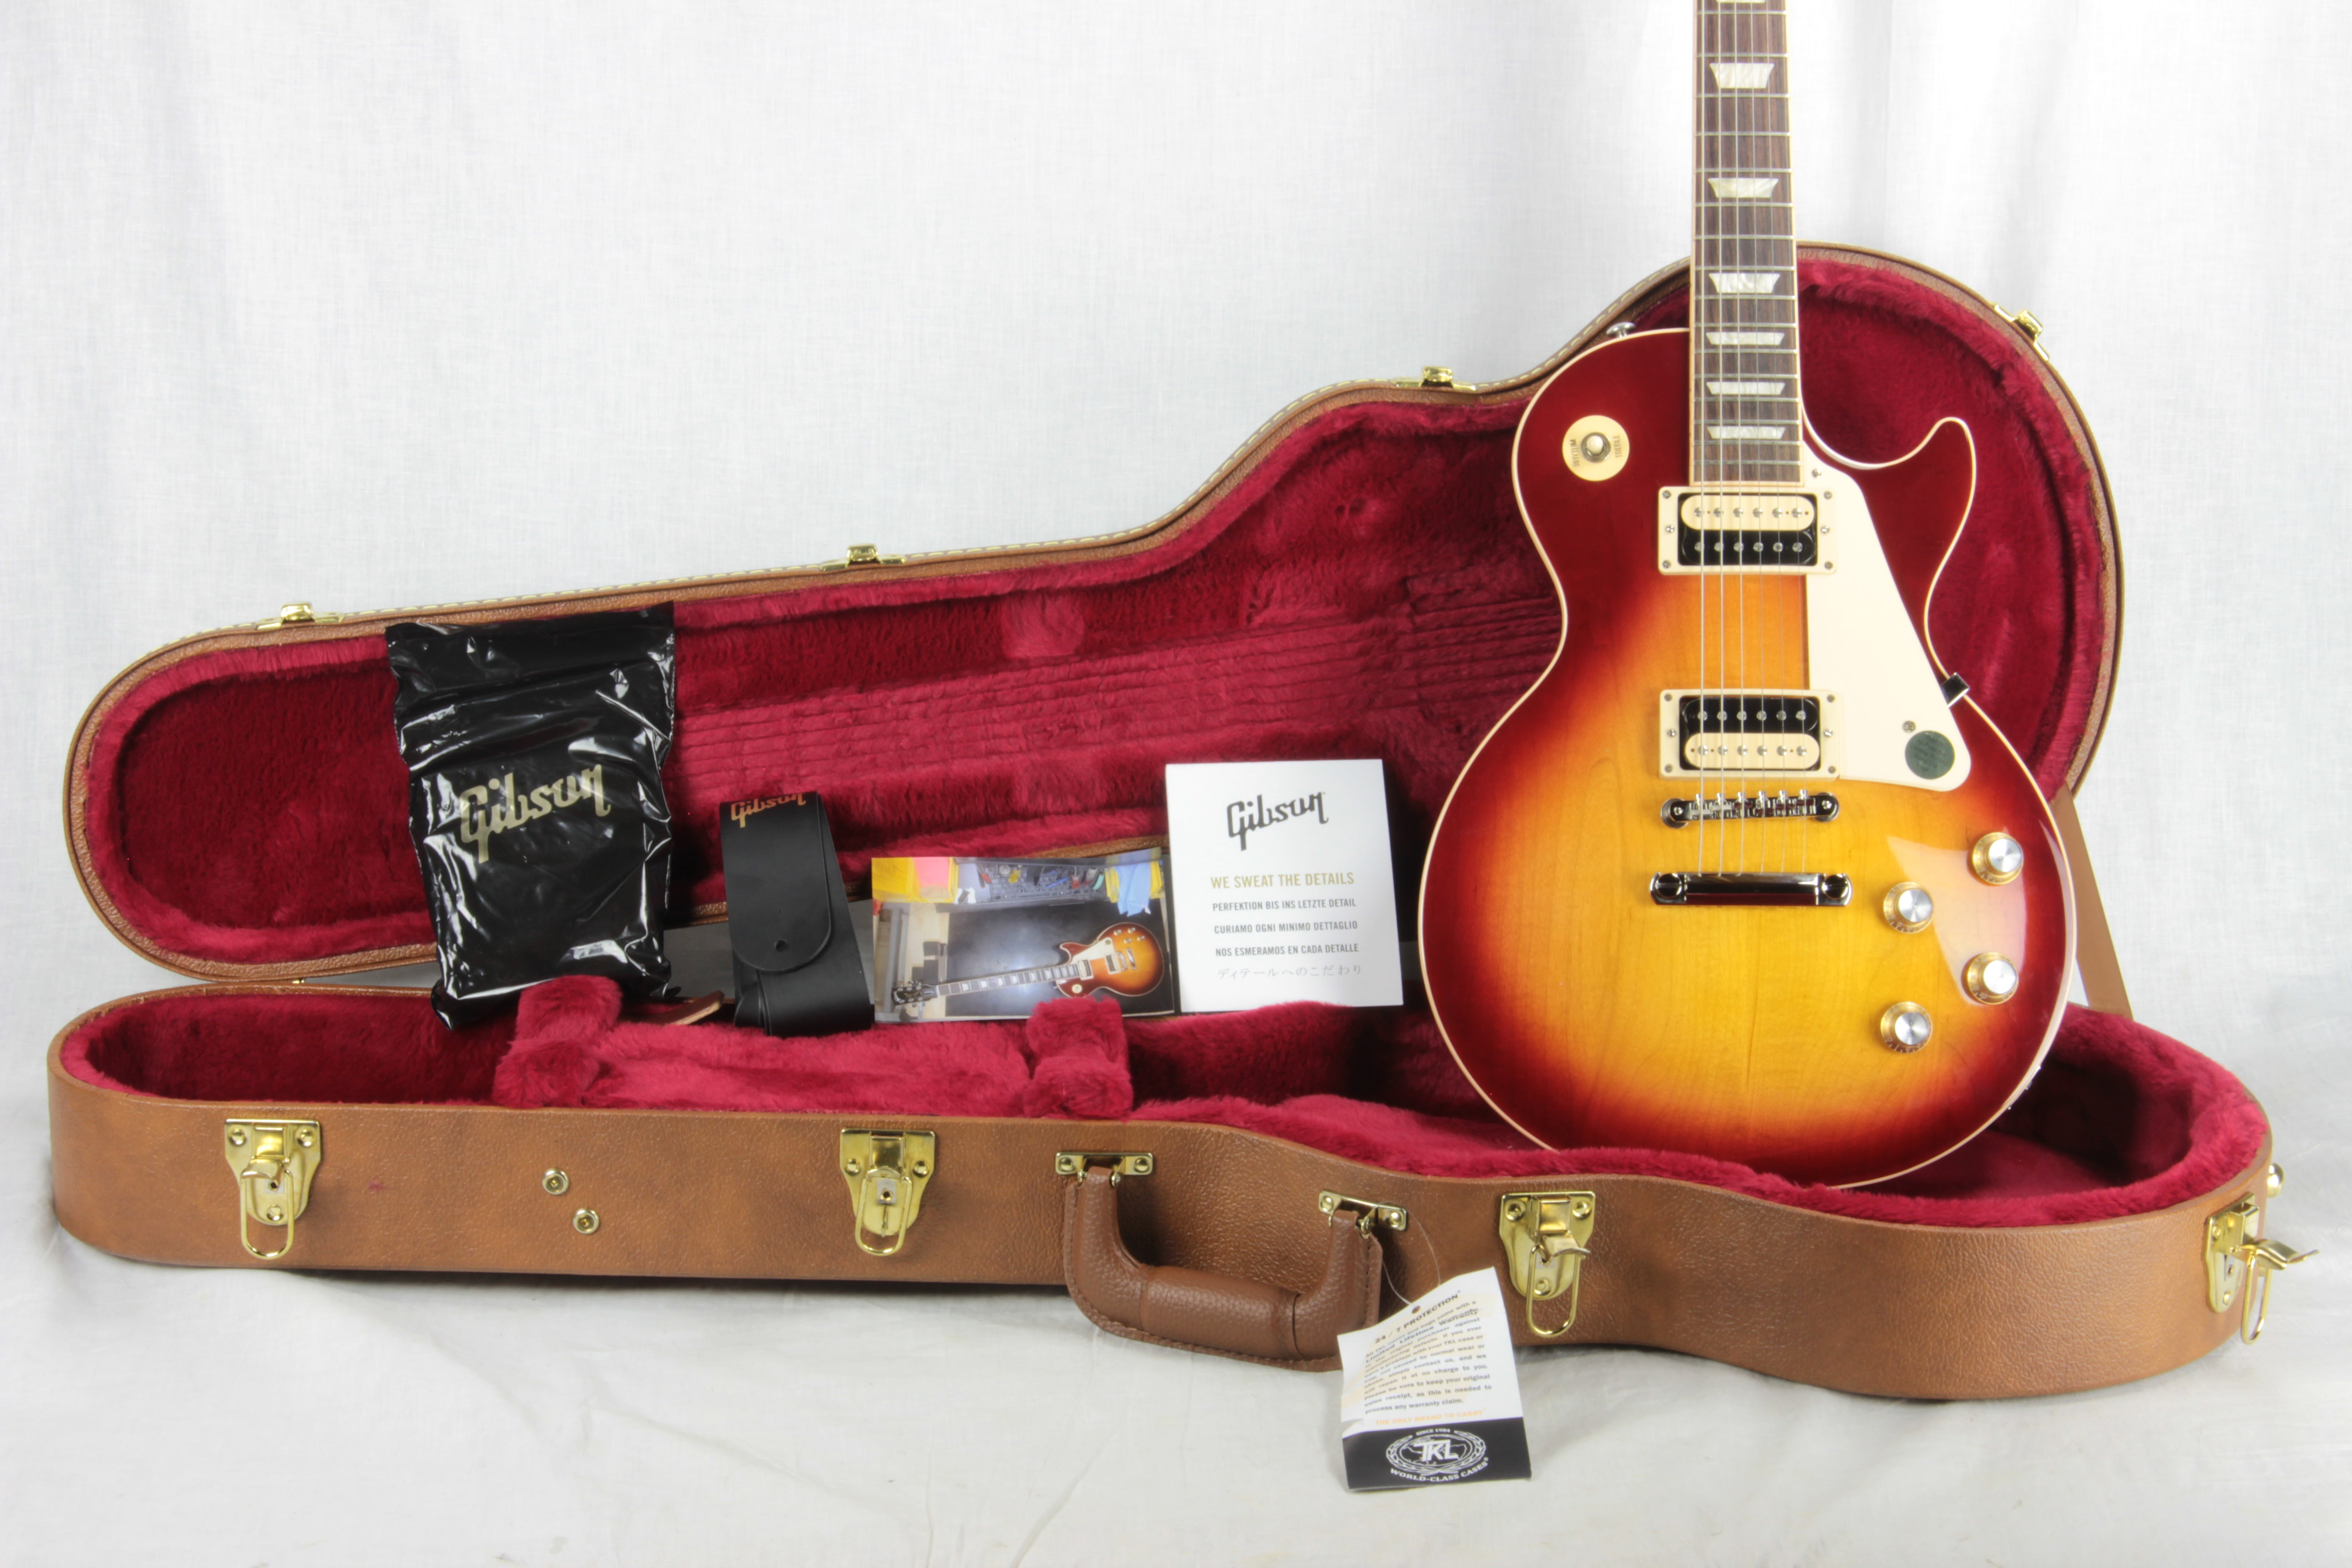 *SOLD*  2019 Gibson Les Paul Classic Heritage Cherry Sunburst 60's Neck w Zebra Pickups!